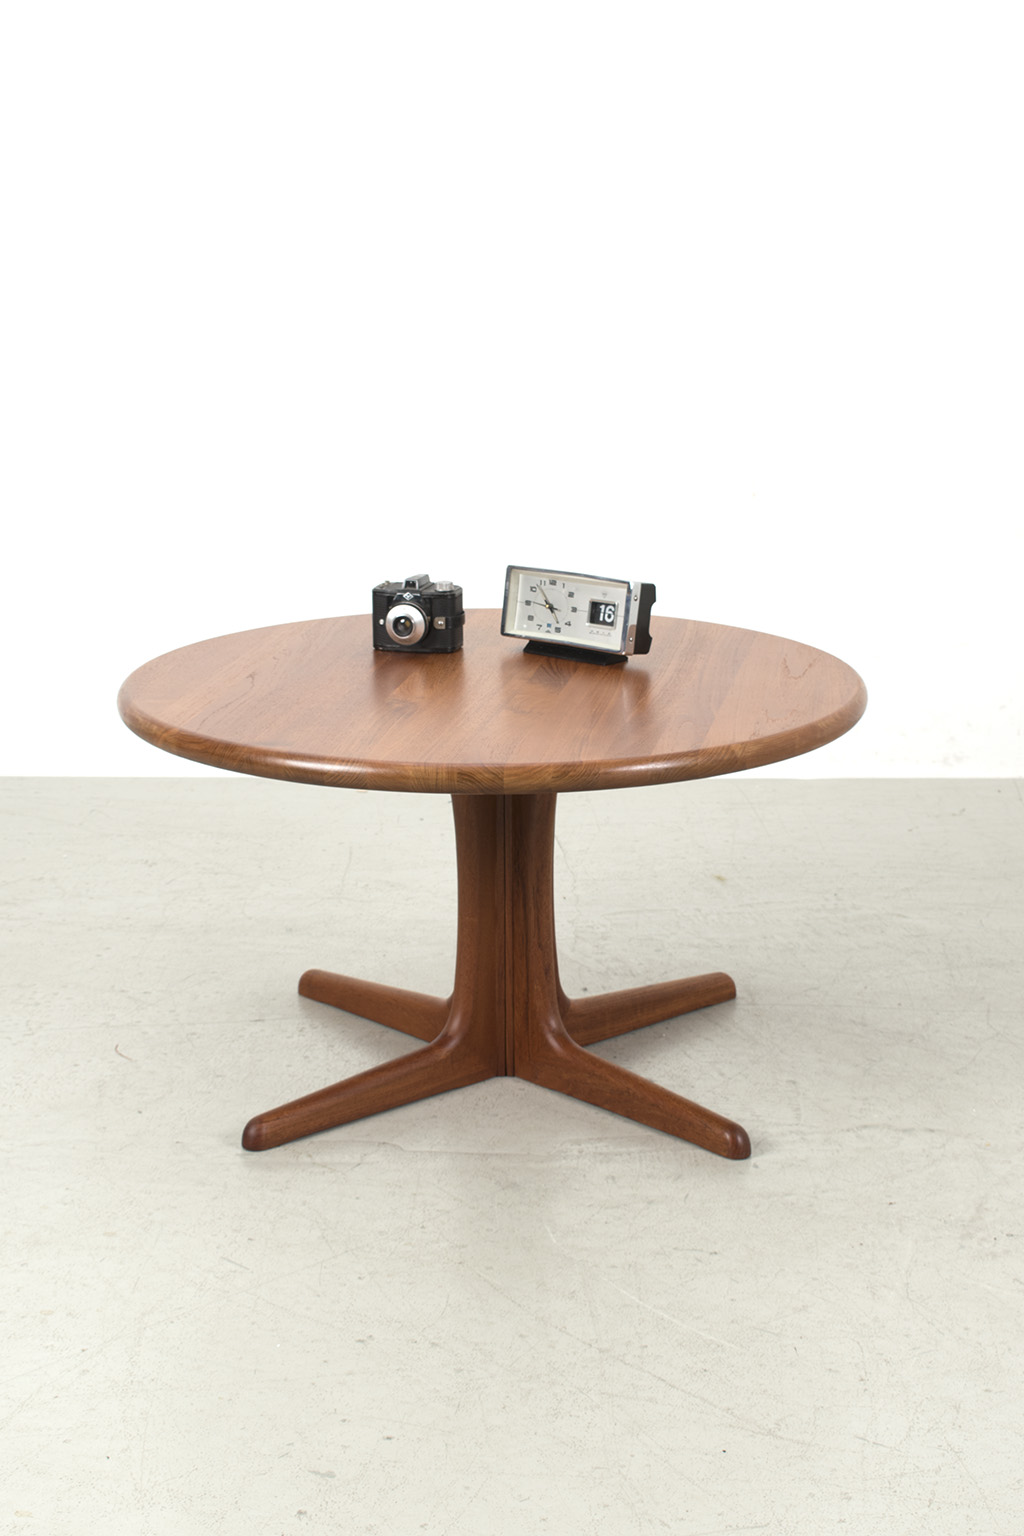 Danish teak coffee table 70s